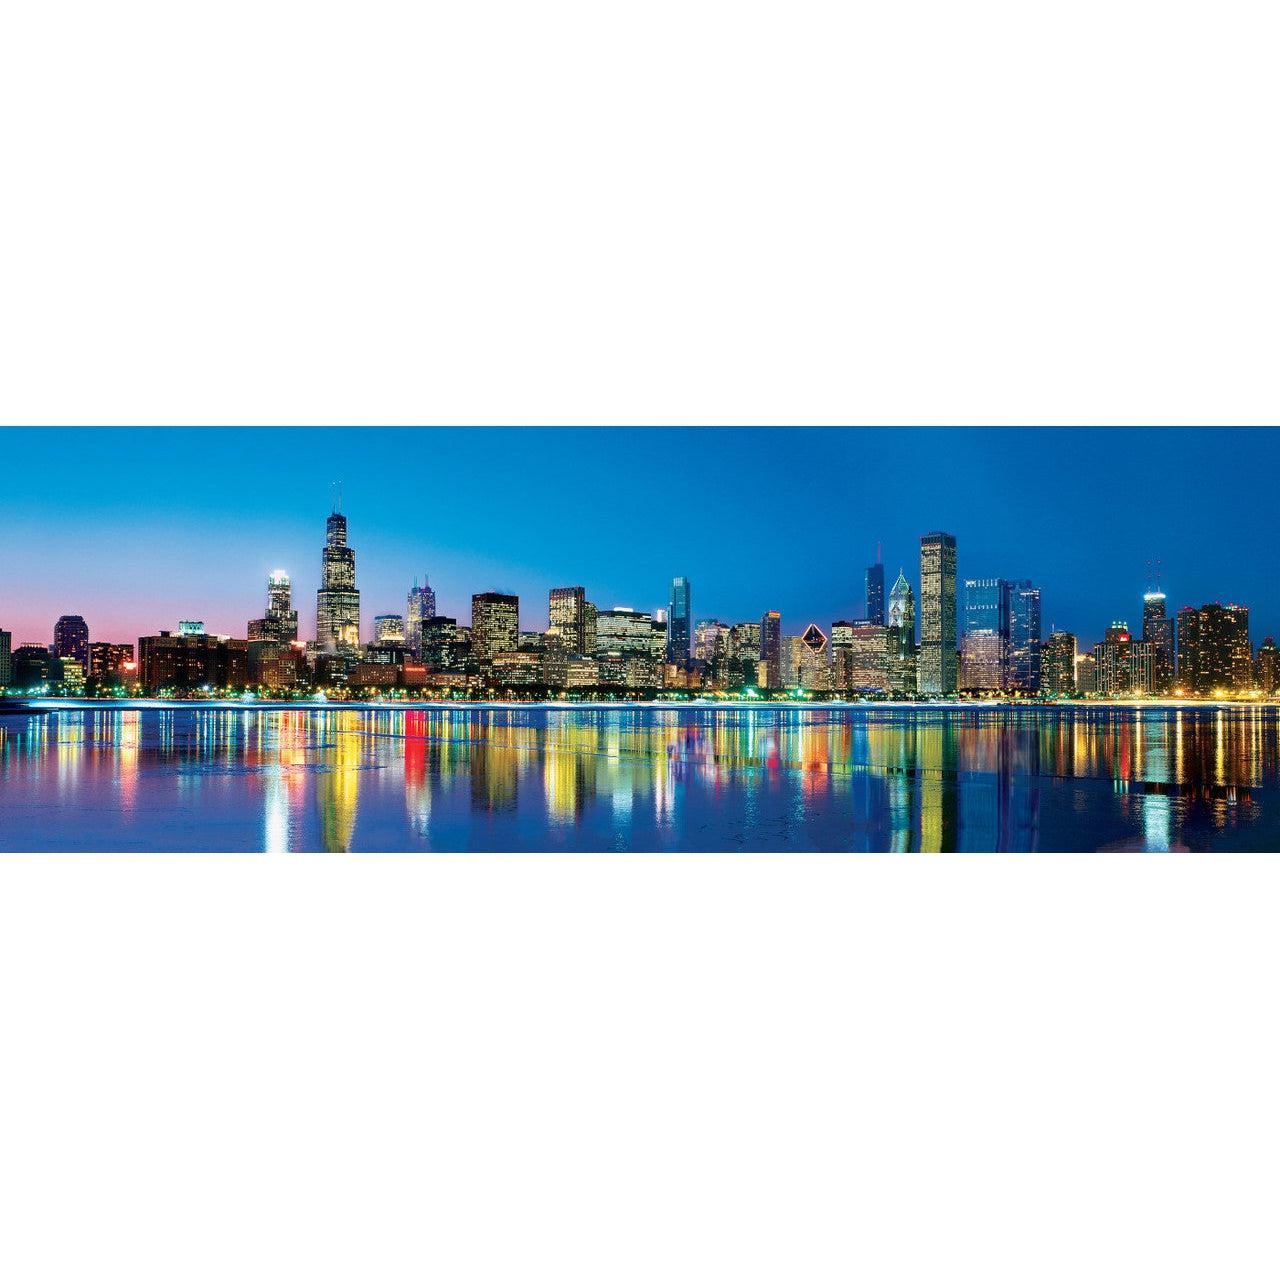 Blakeway Panoramas - Chicago - 1000 Piece Panoramic Puzzle